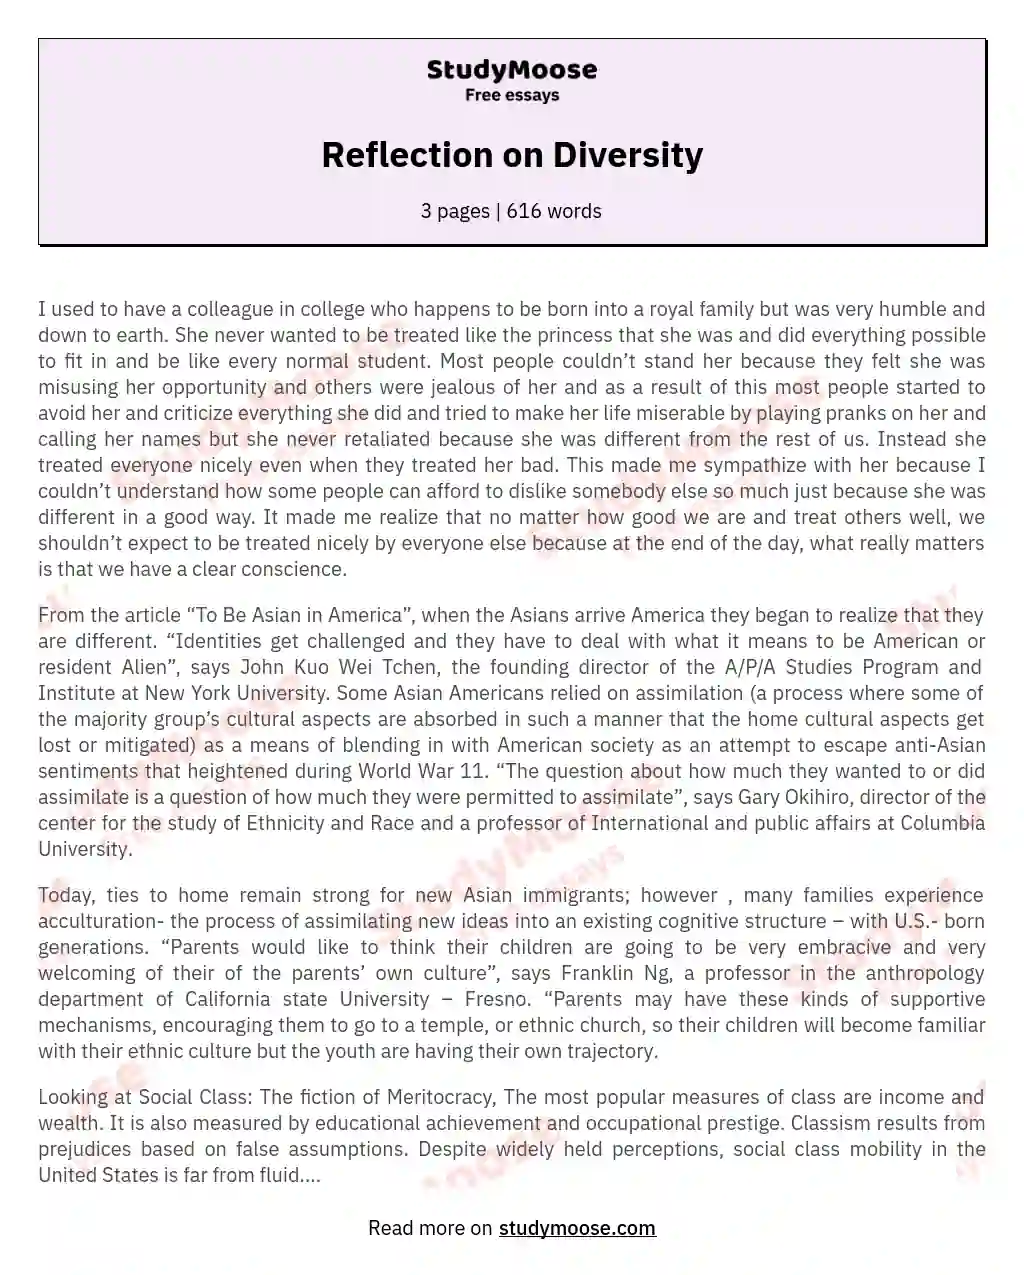 Reflection on Diversity essay